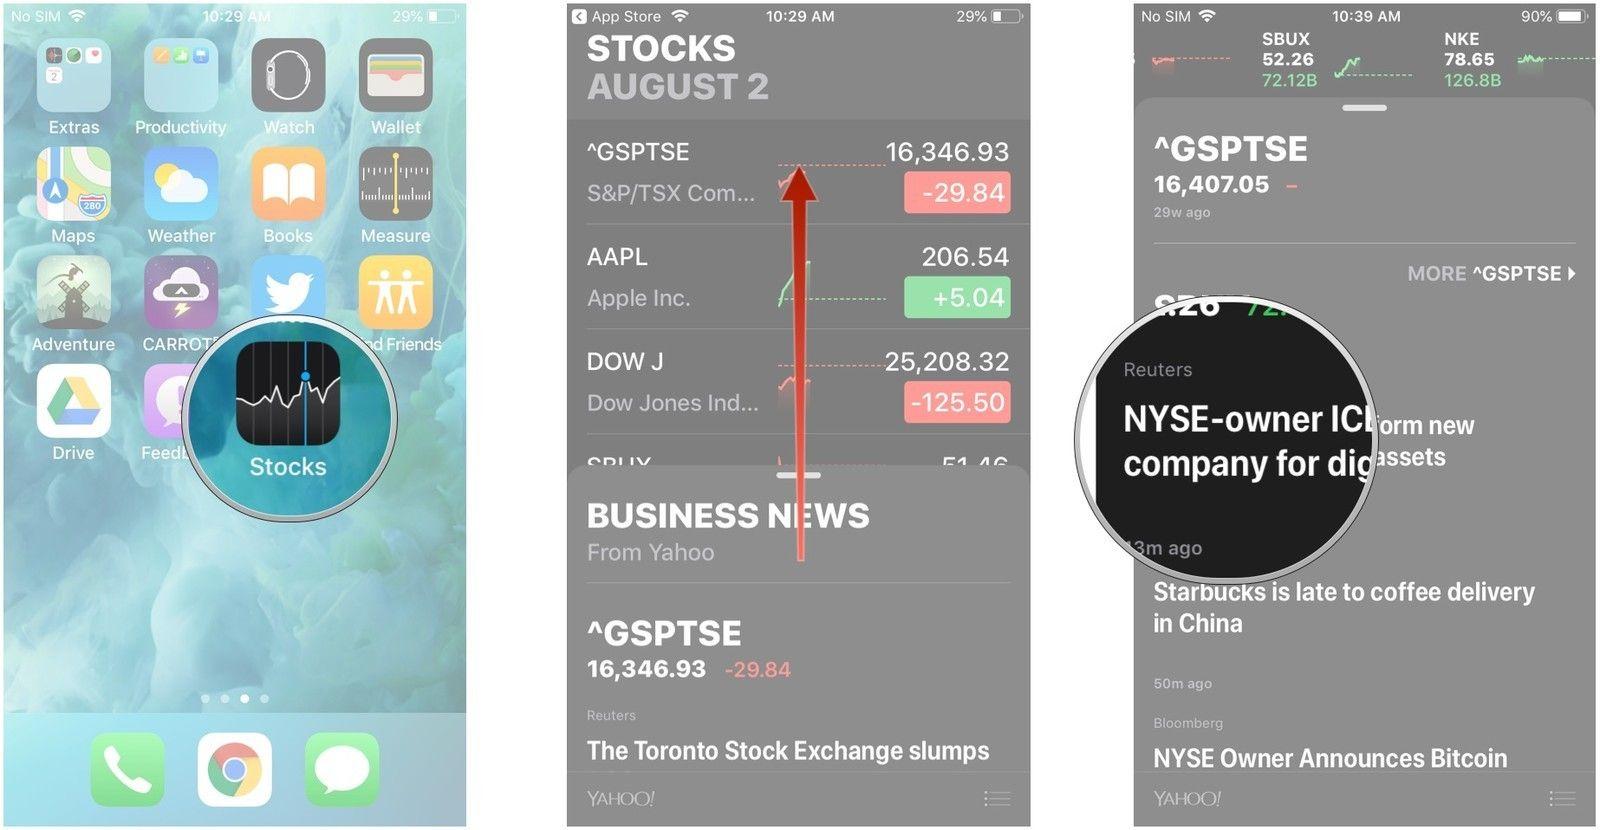 Stocks App Logo - Stocks App: The ultimate guide